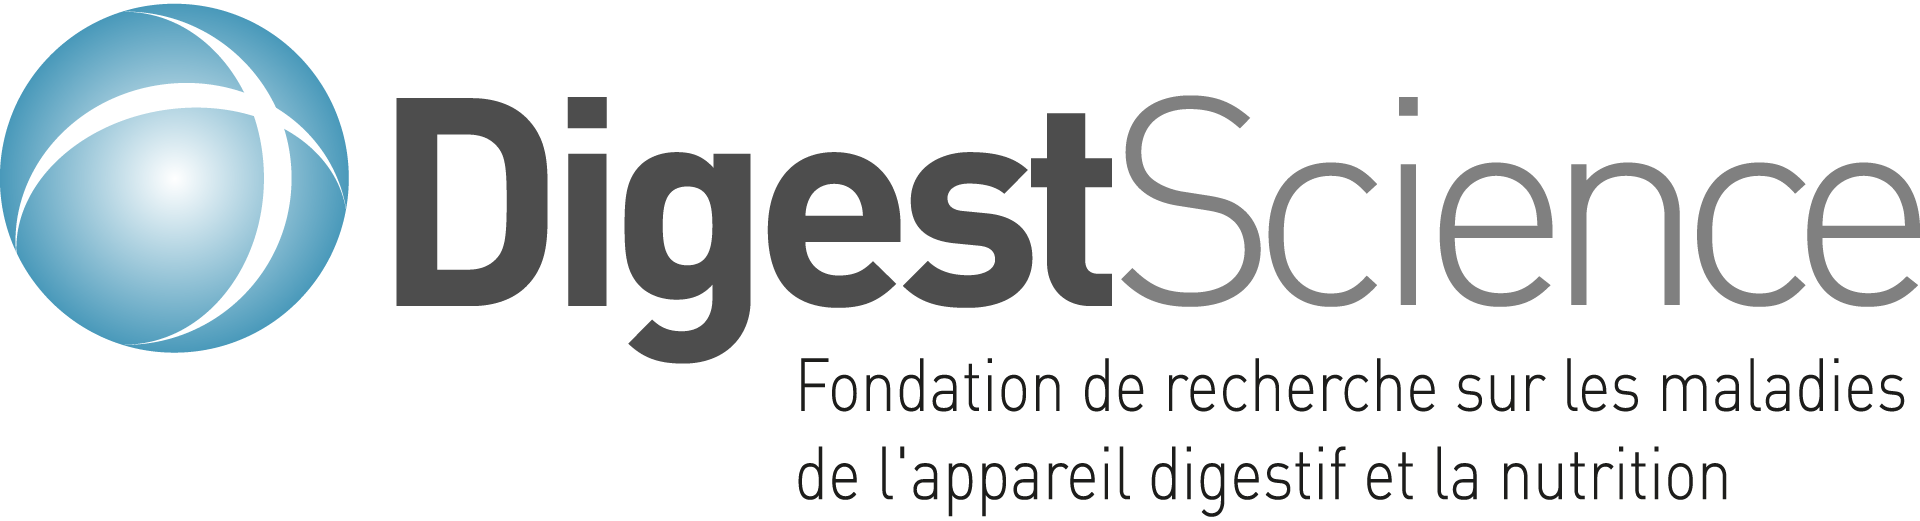 Digestscience Logo 2023